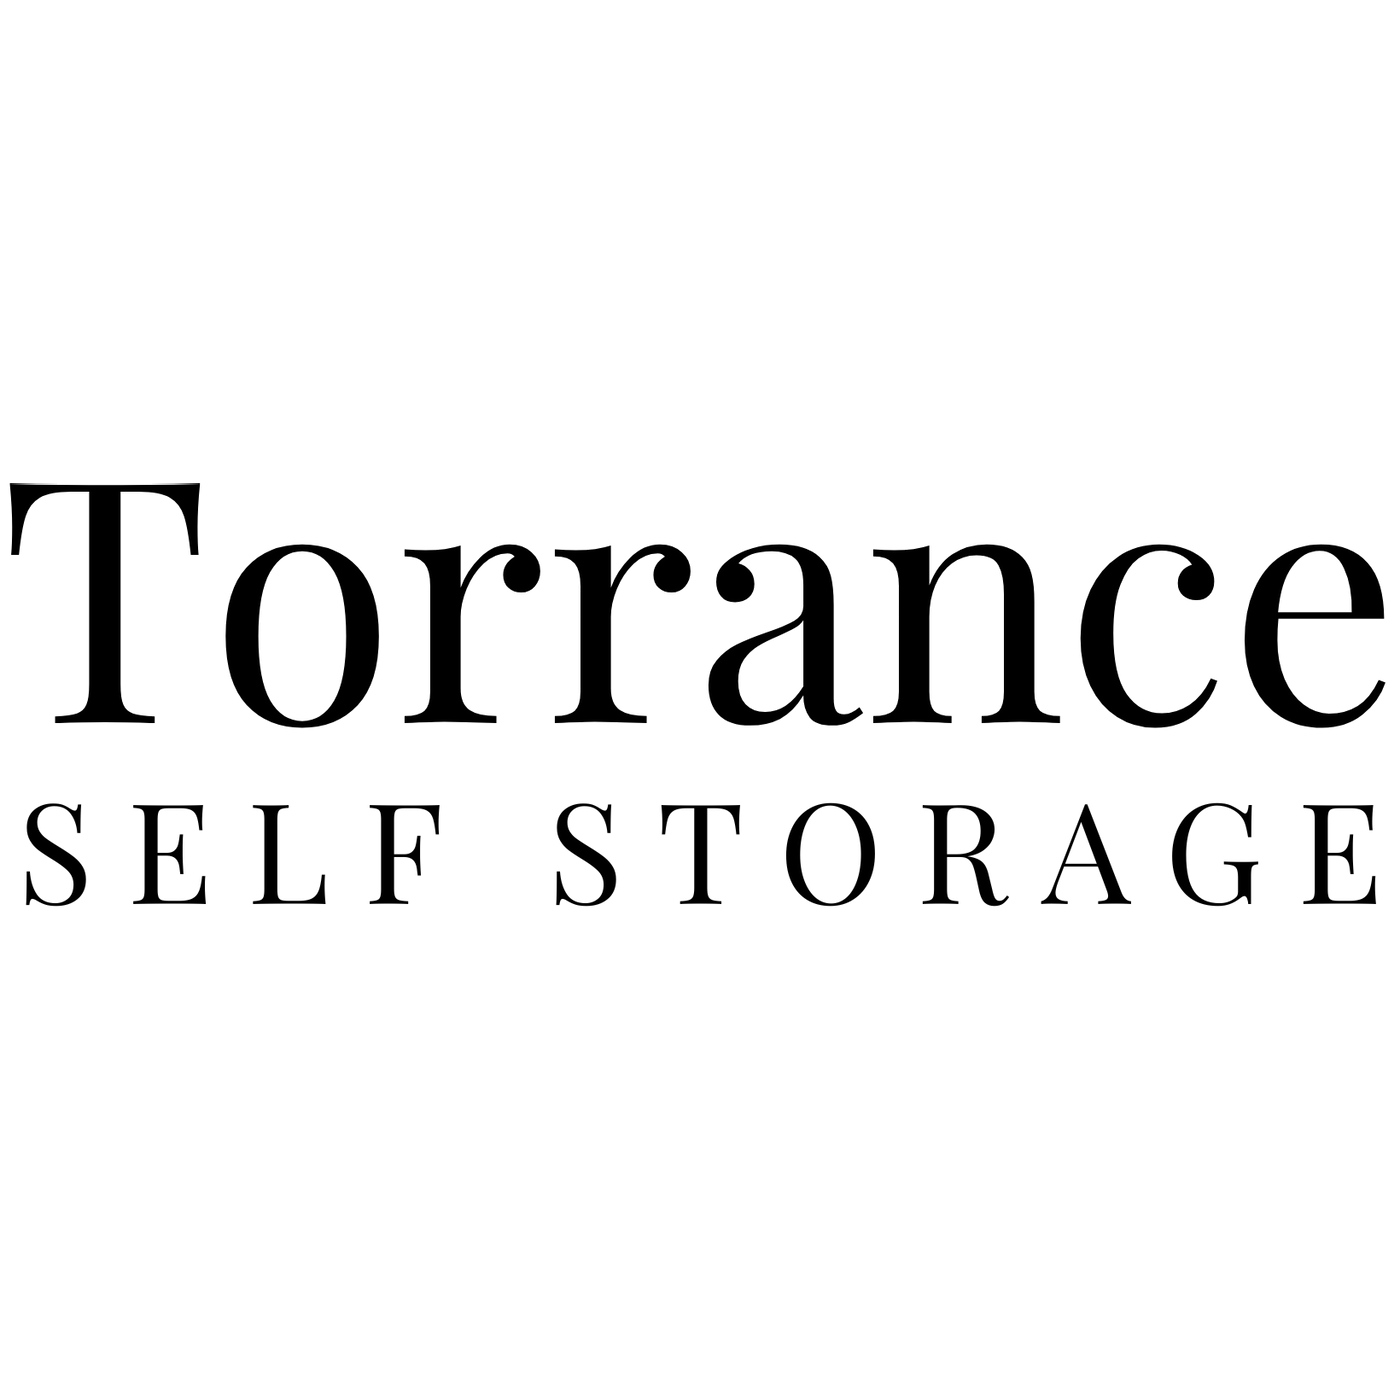 Torrance Self Storage - Torrance, CA 90501 - (424)459-8059 | ShowMeLocal.com